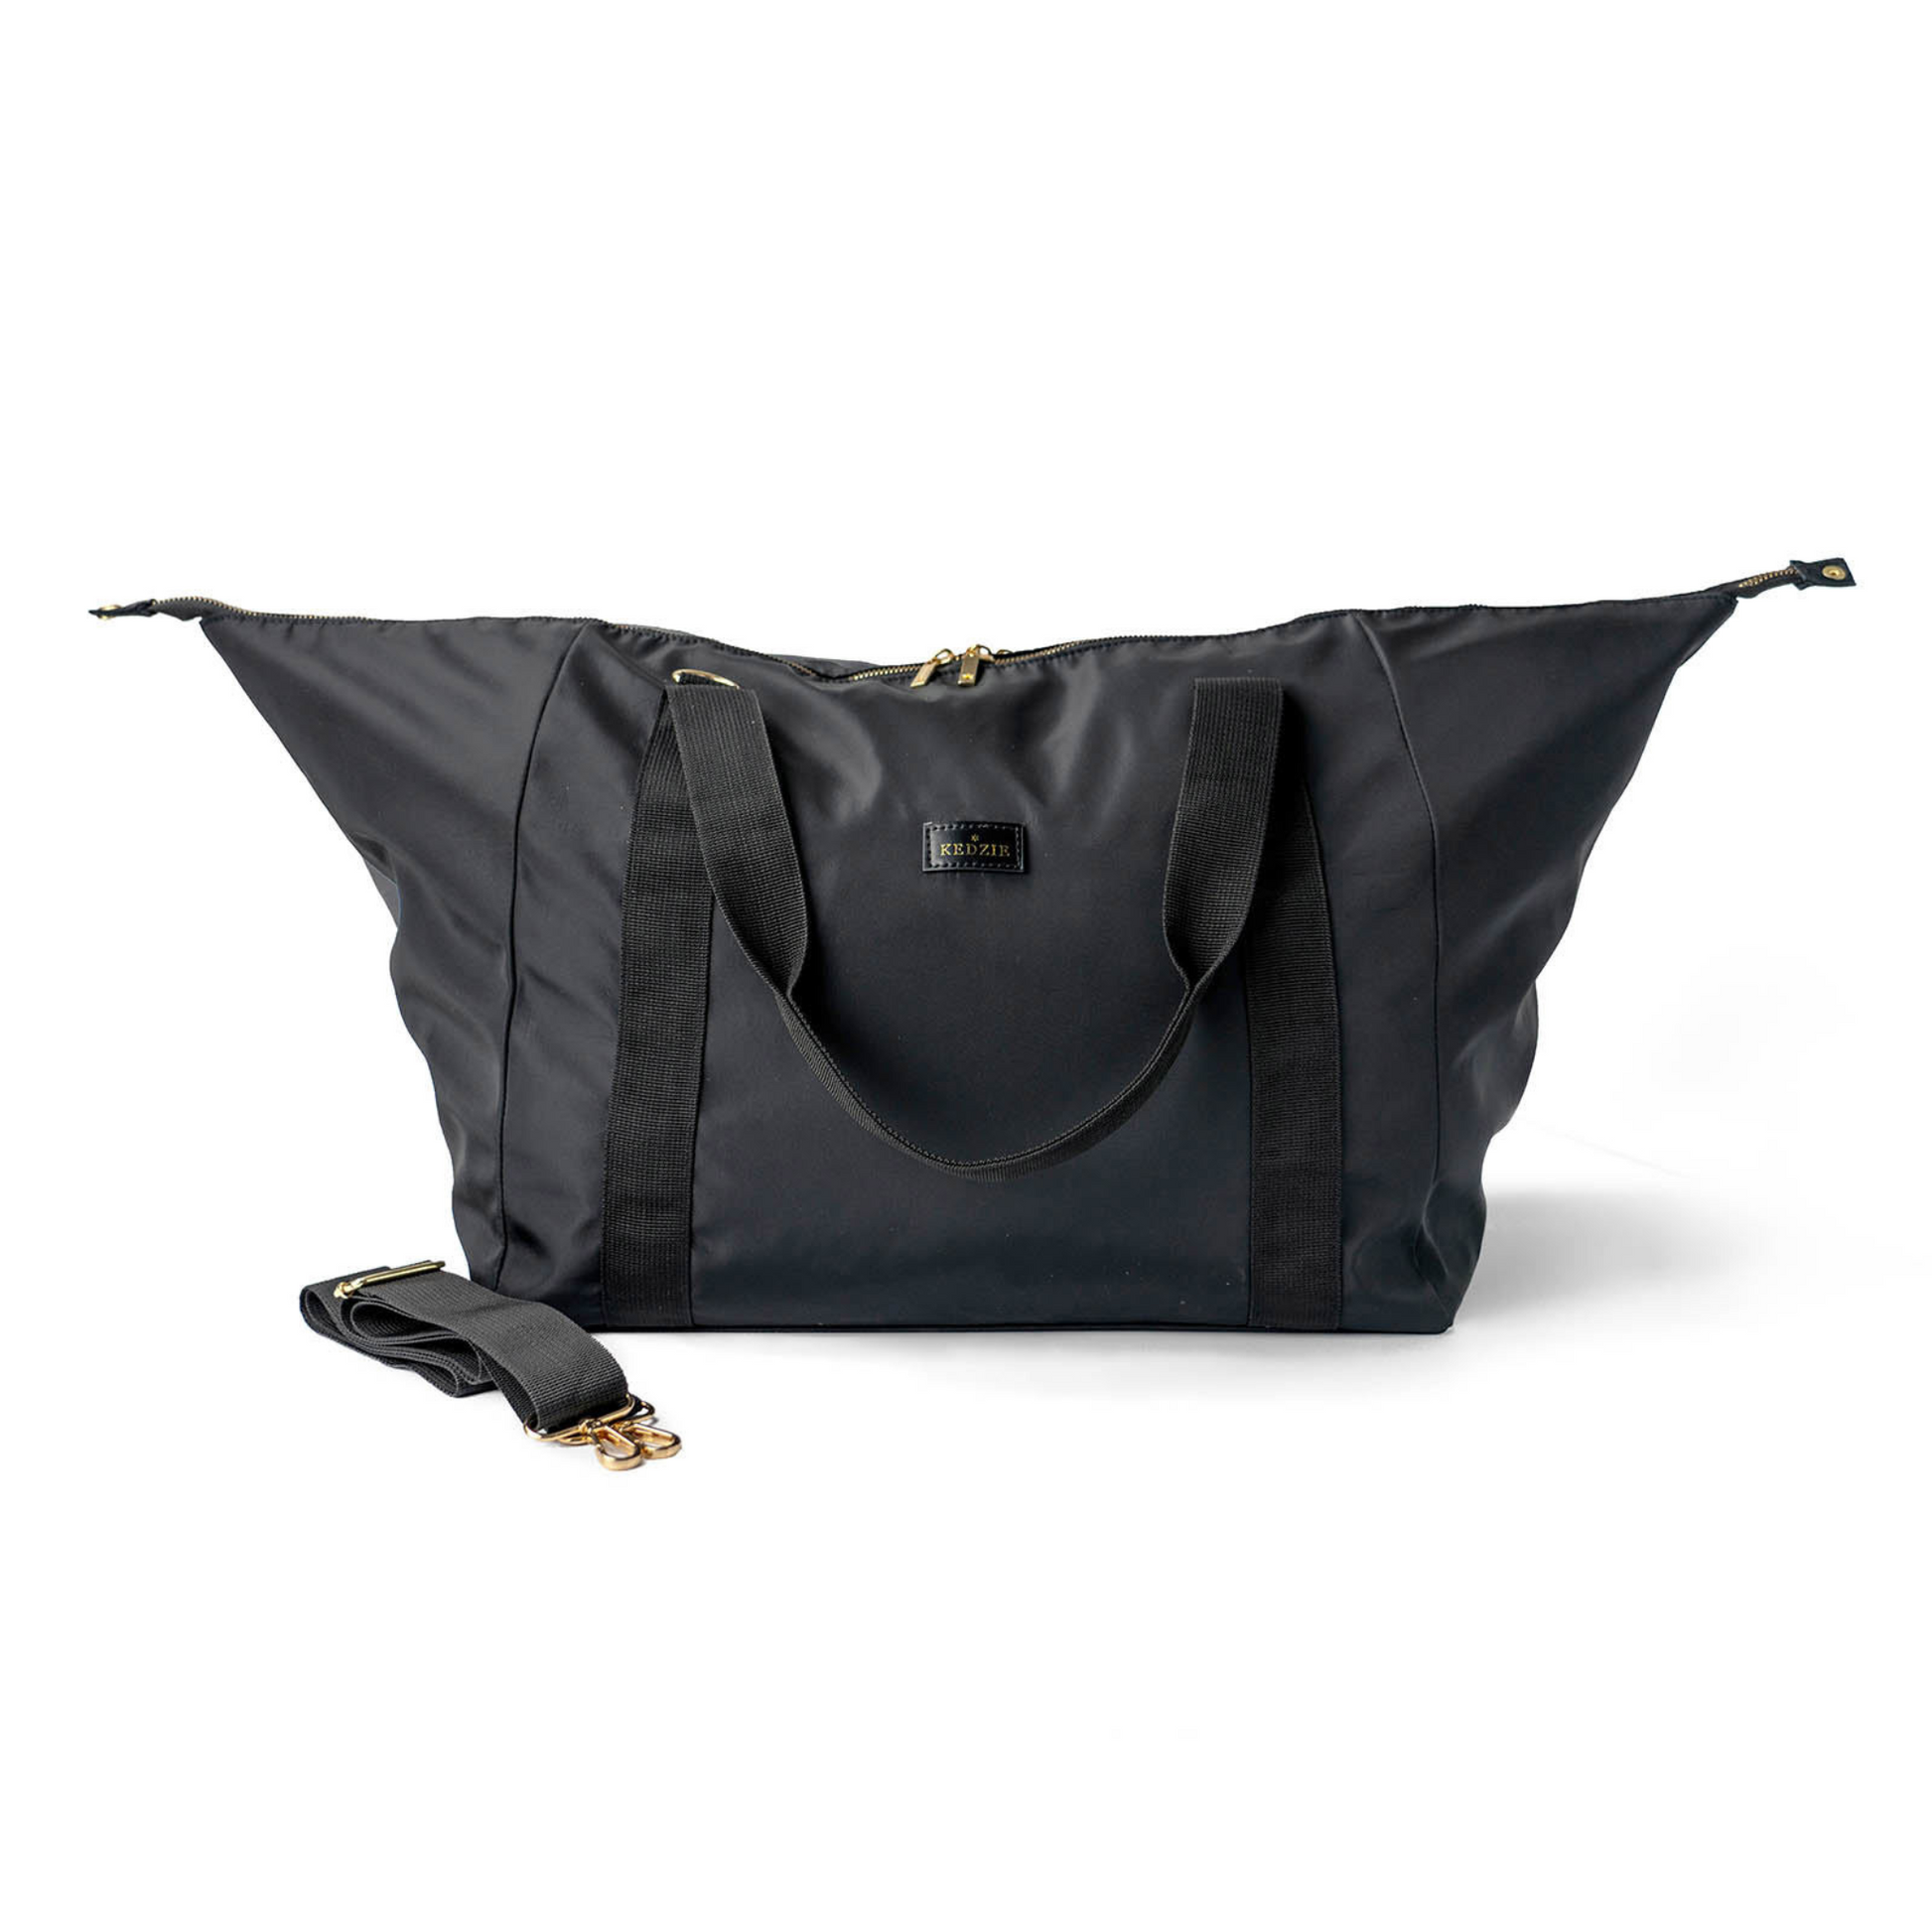 Kenzie foldable duffle bag in black